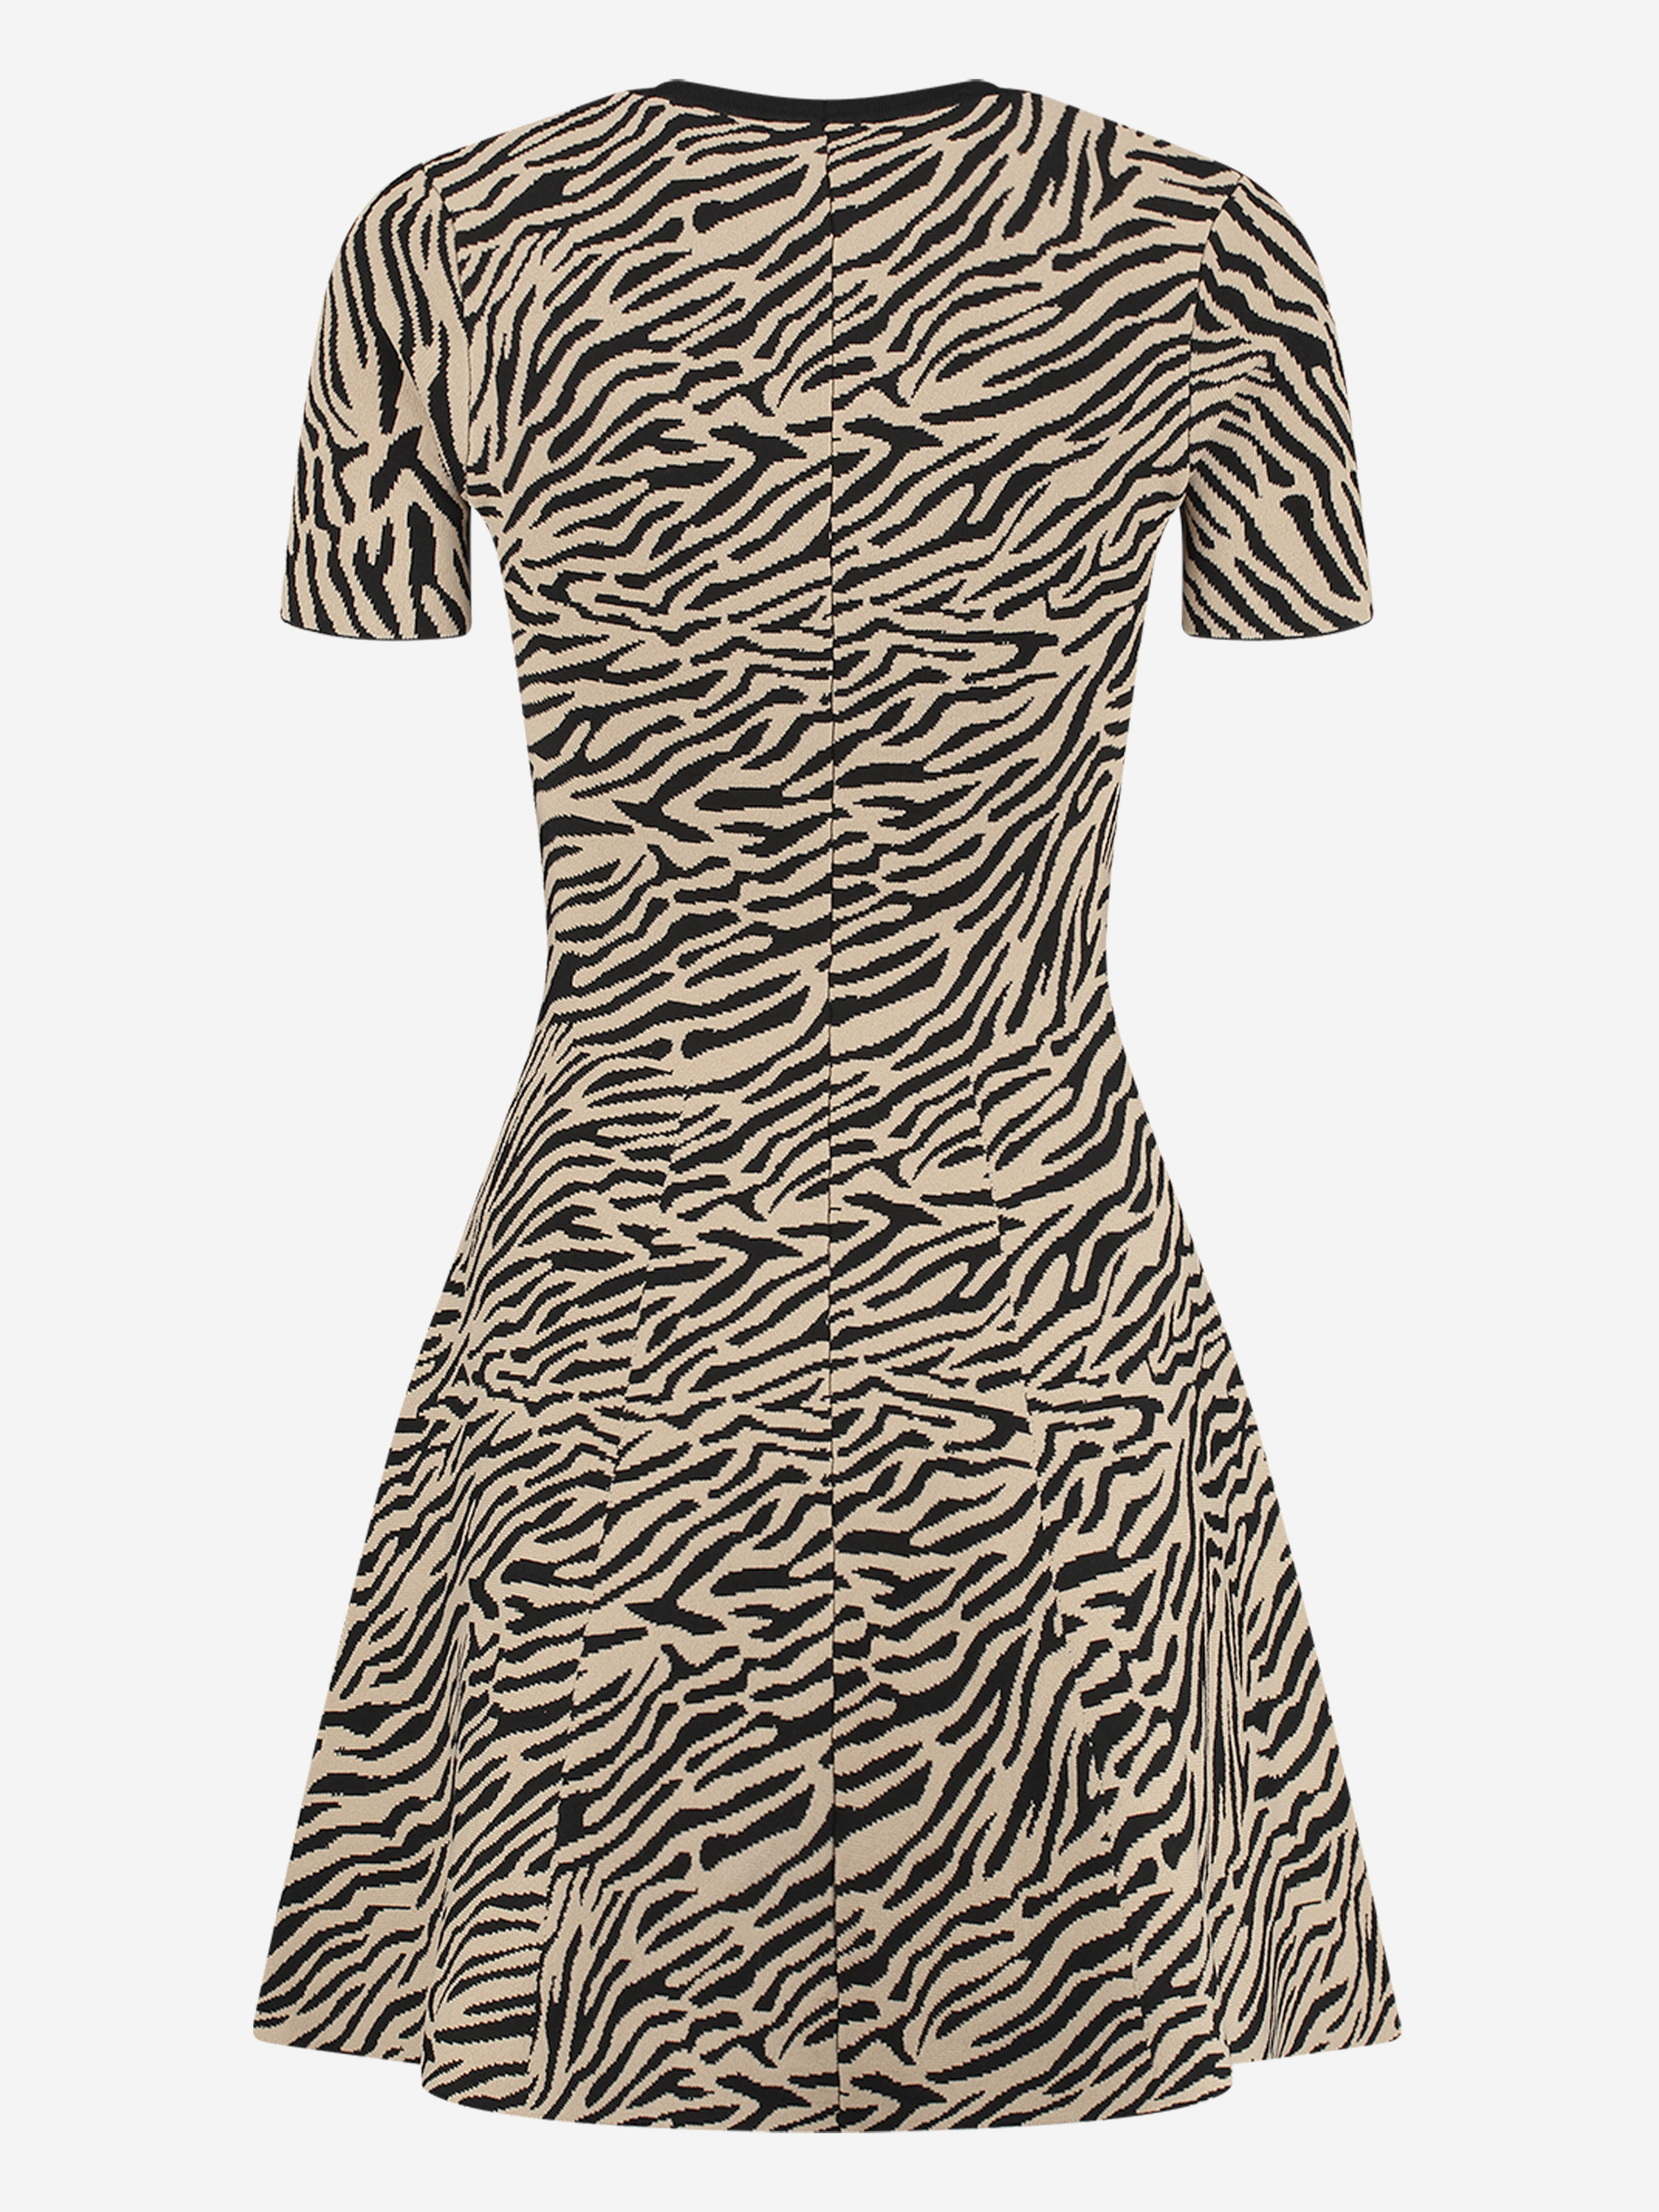 Ventura Zebra Dress